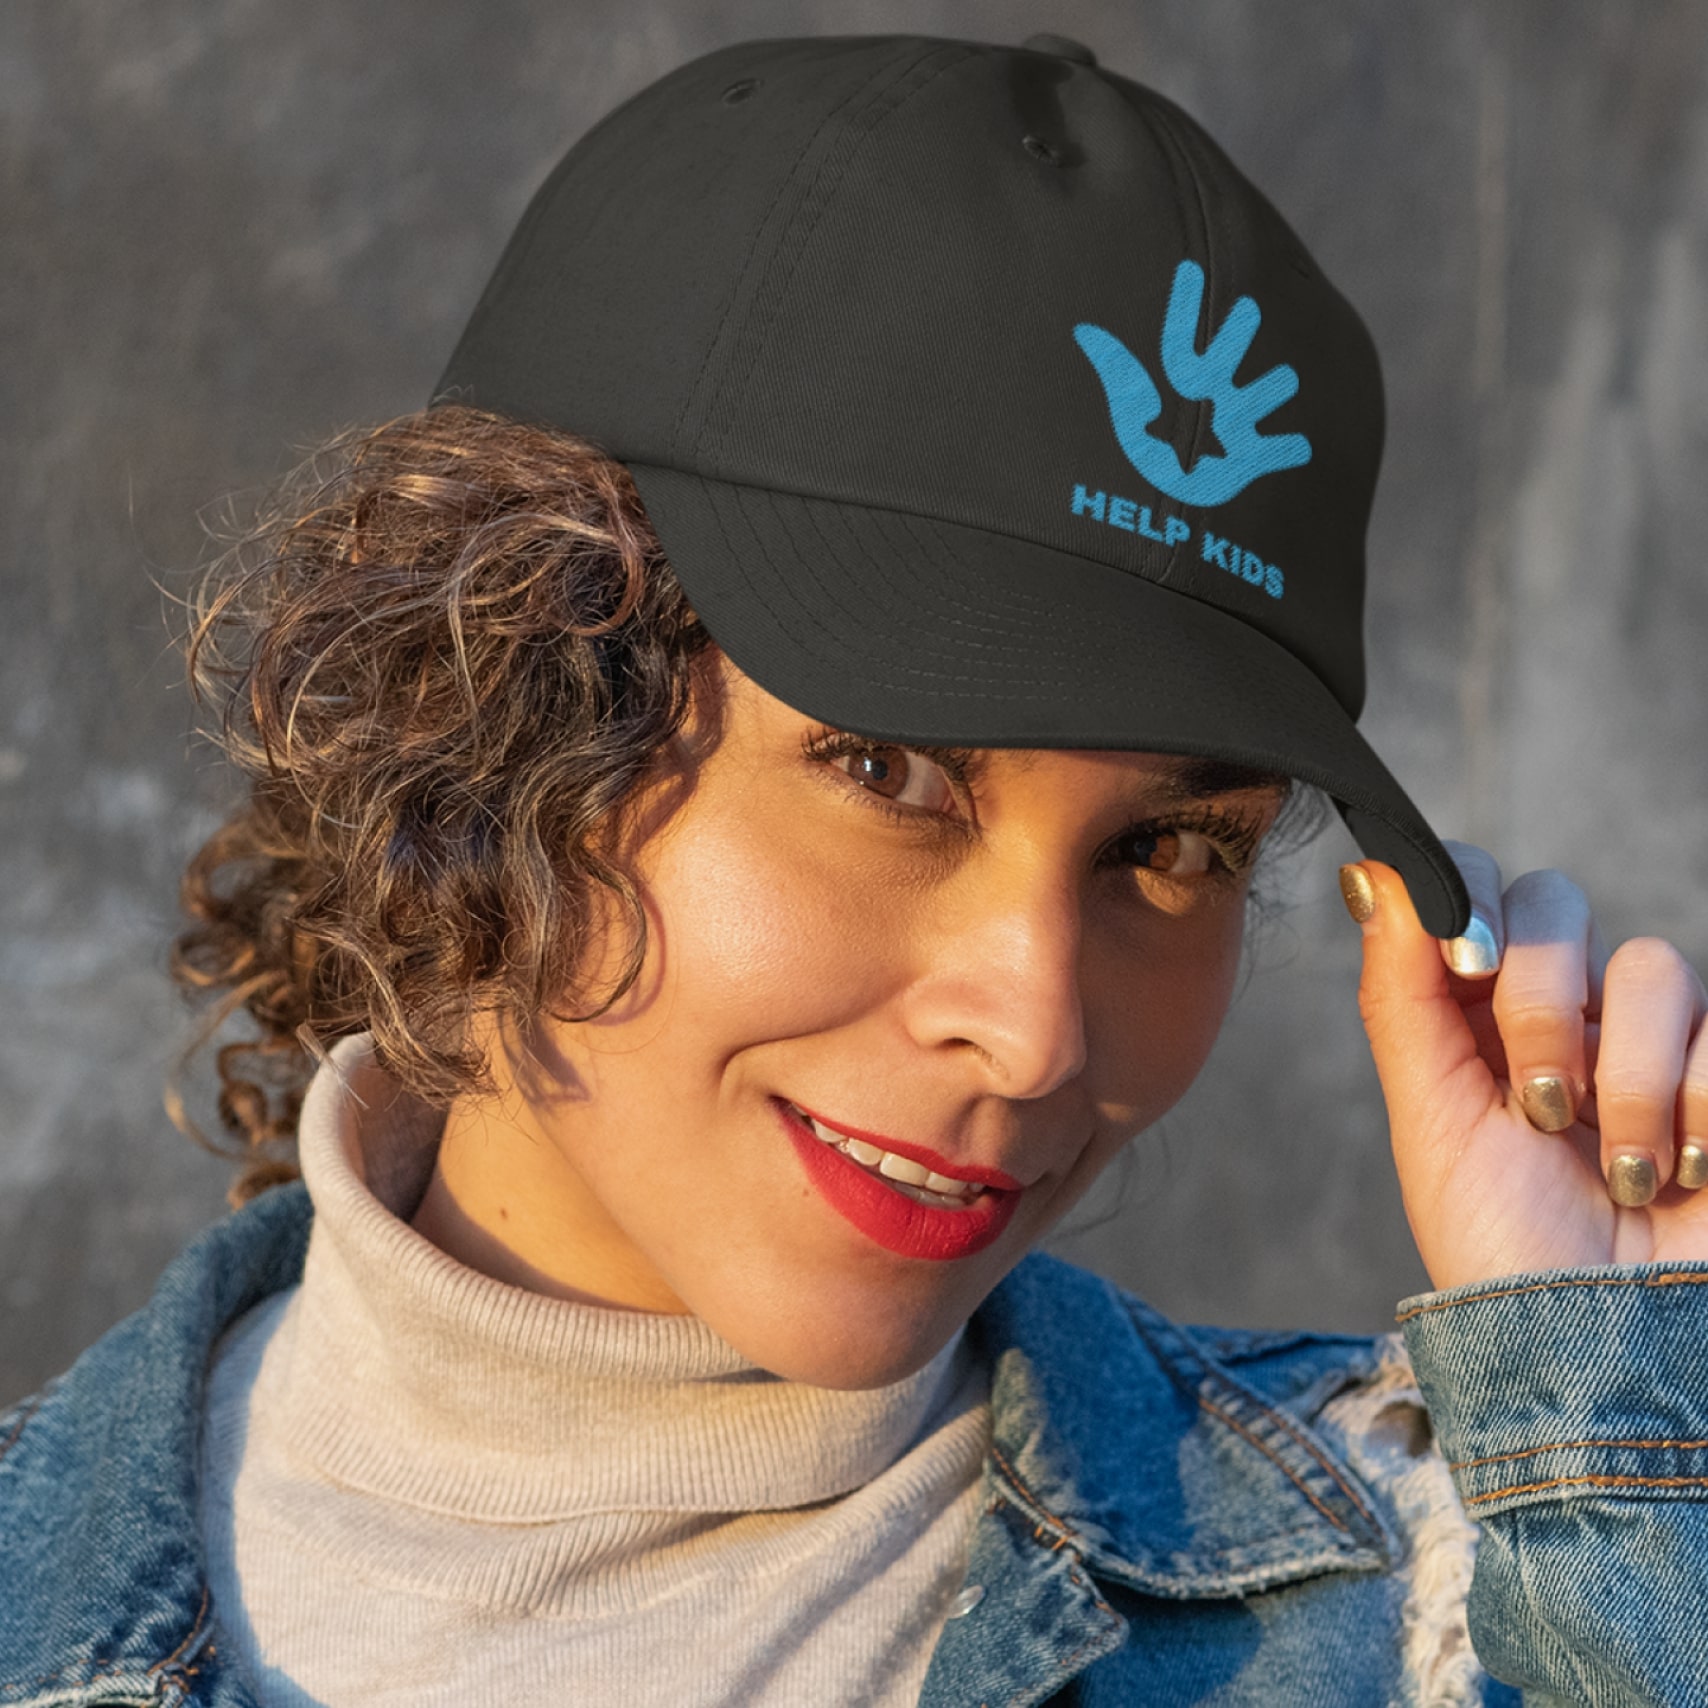 A woman wearing a dark custom cap with a logo.